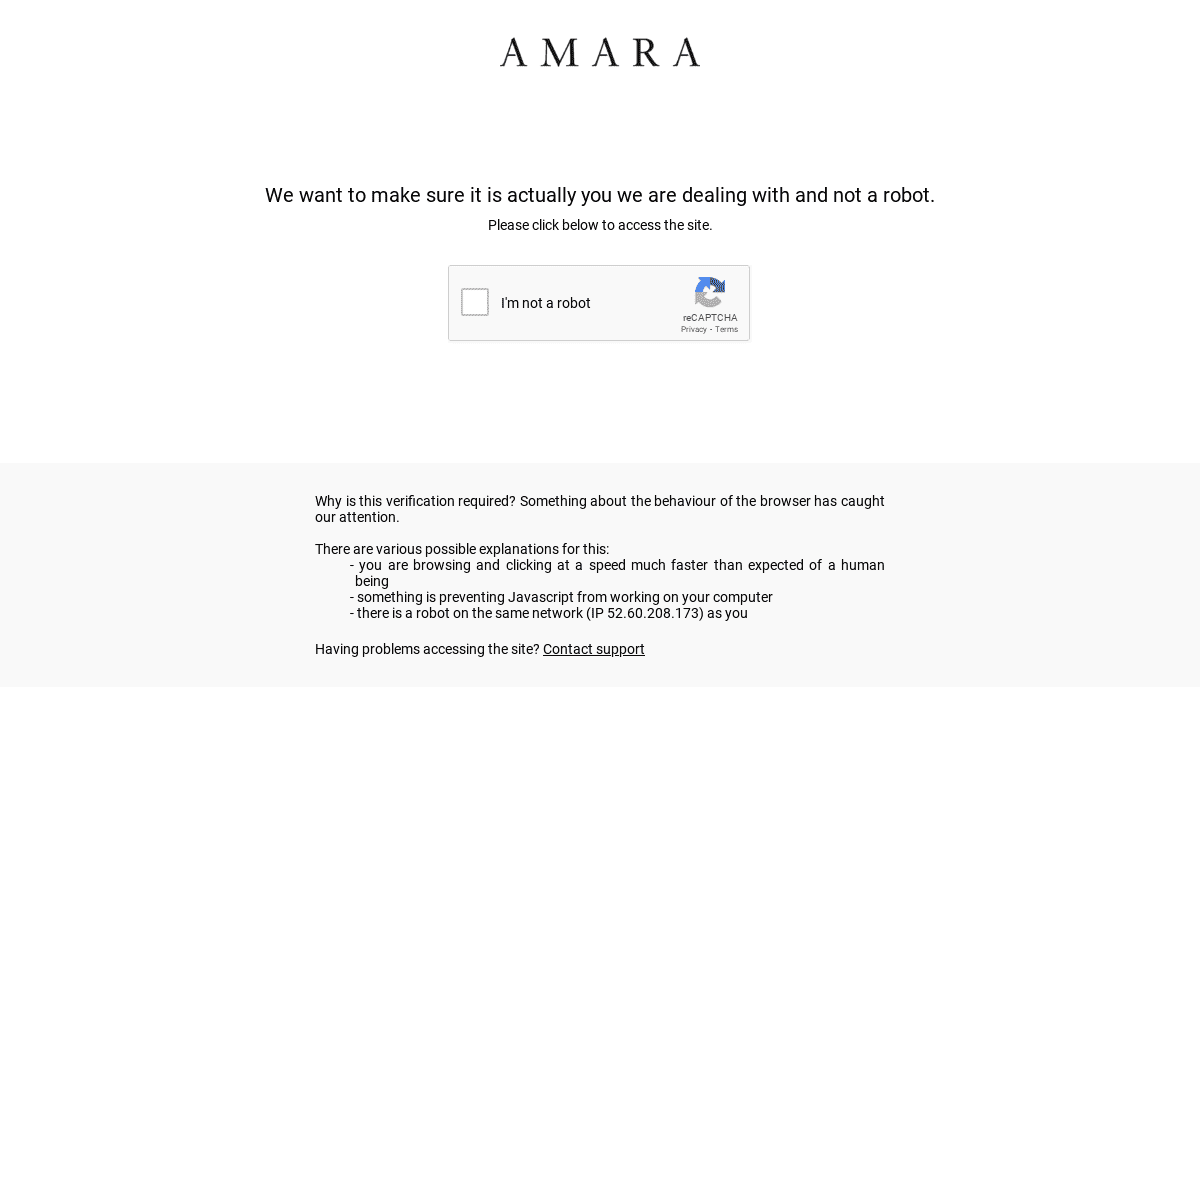 A complete backup of https://amara.co.uk